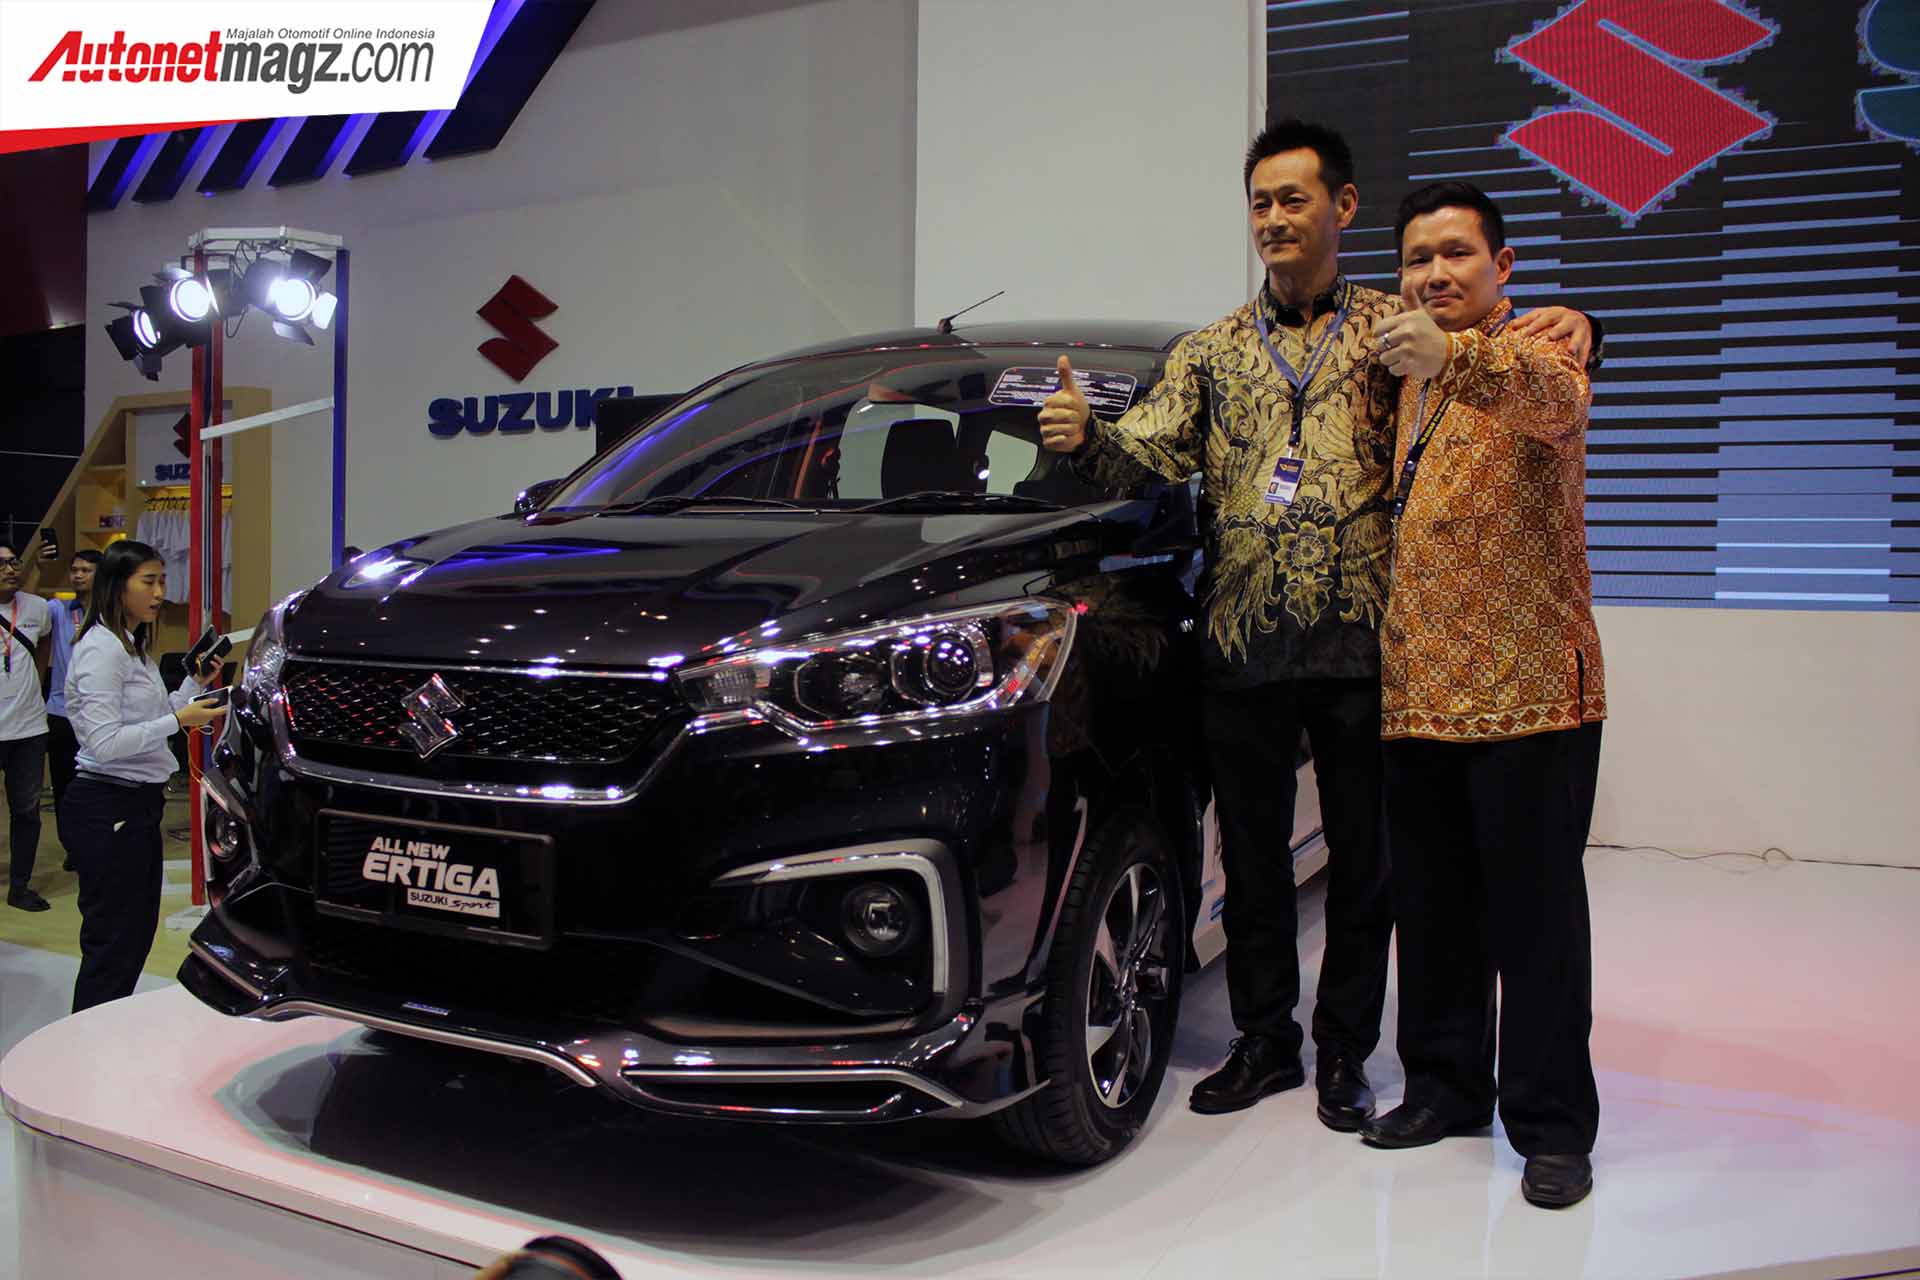 Berita, Launching All New Ertiga Suzuki Sport: Susul Jakarta, All New Ertiga Suzuki Sport Resmi Dirilis di Surabaya